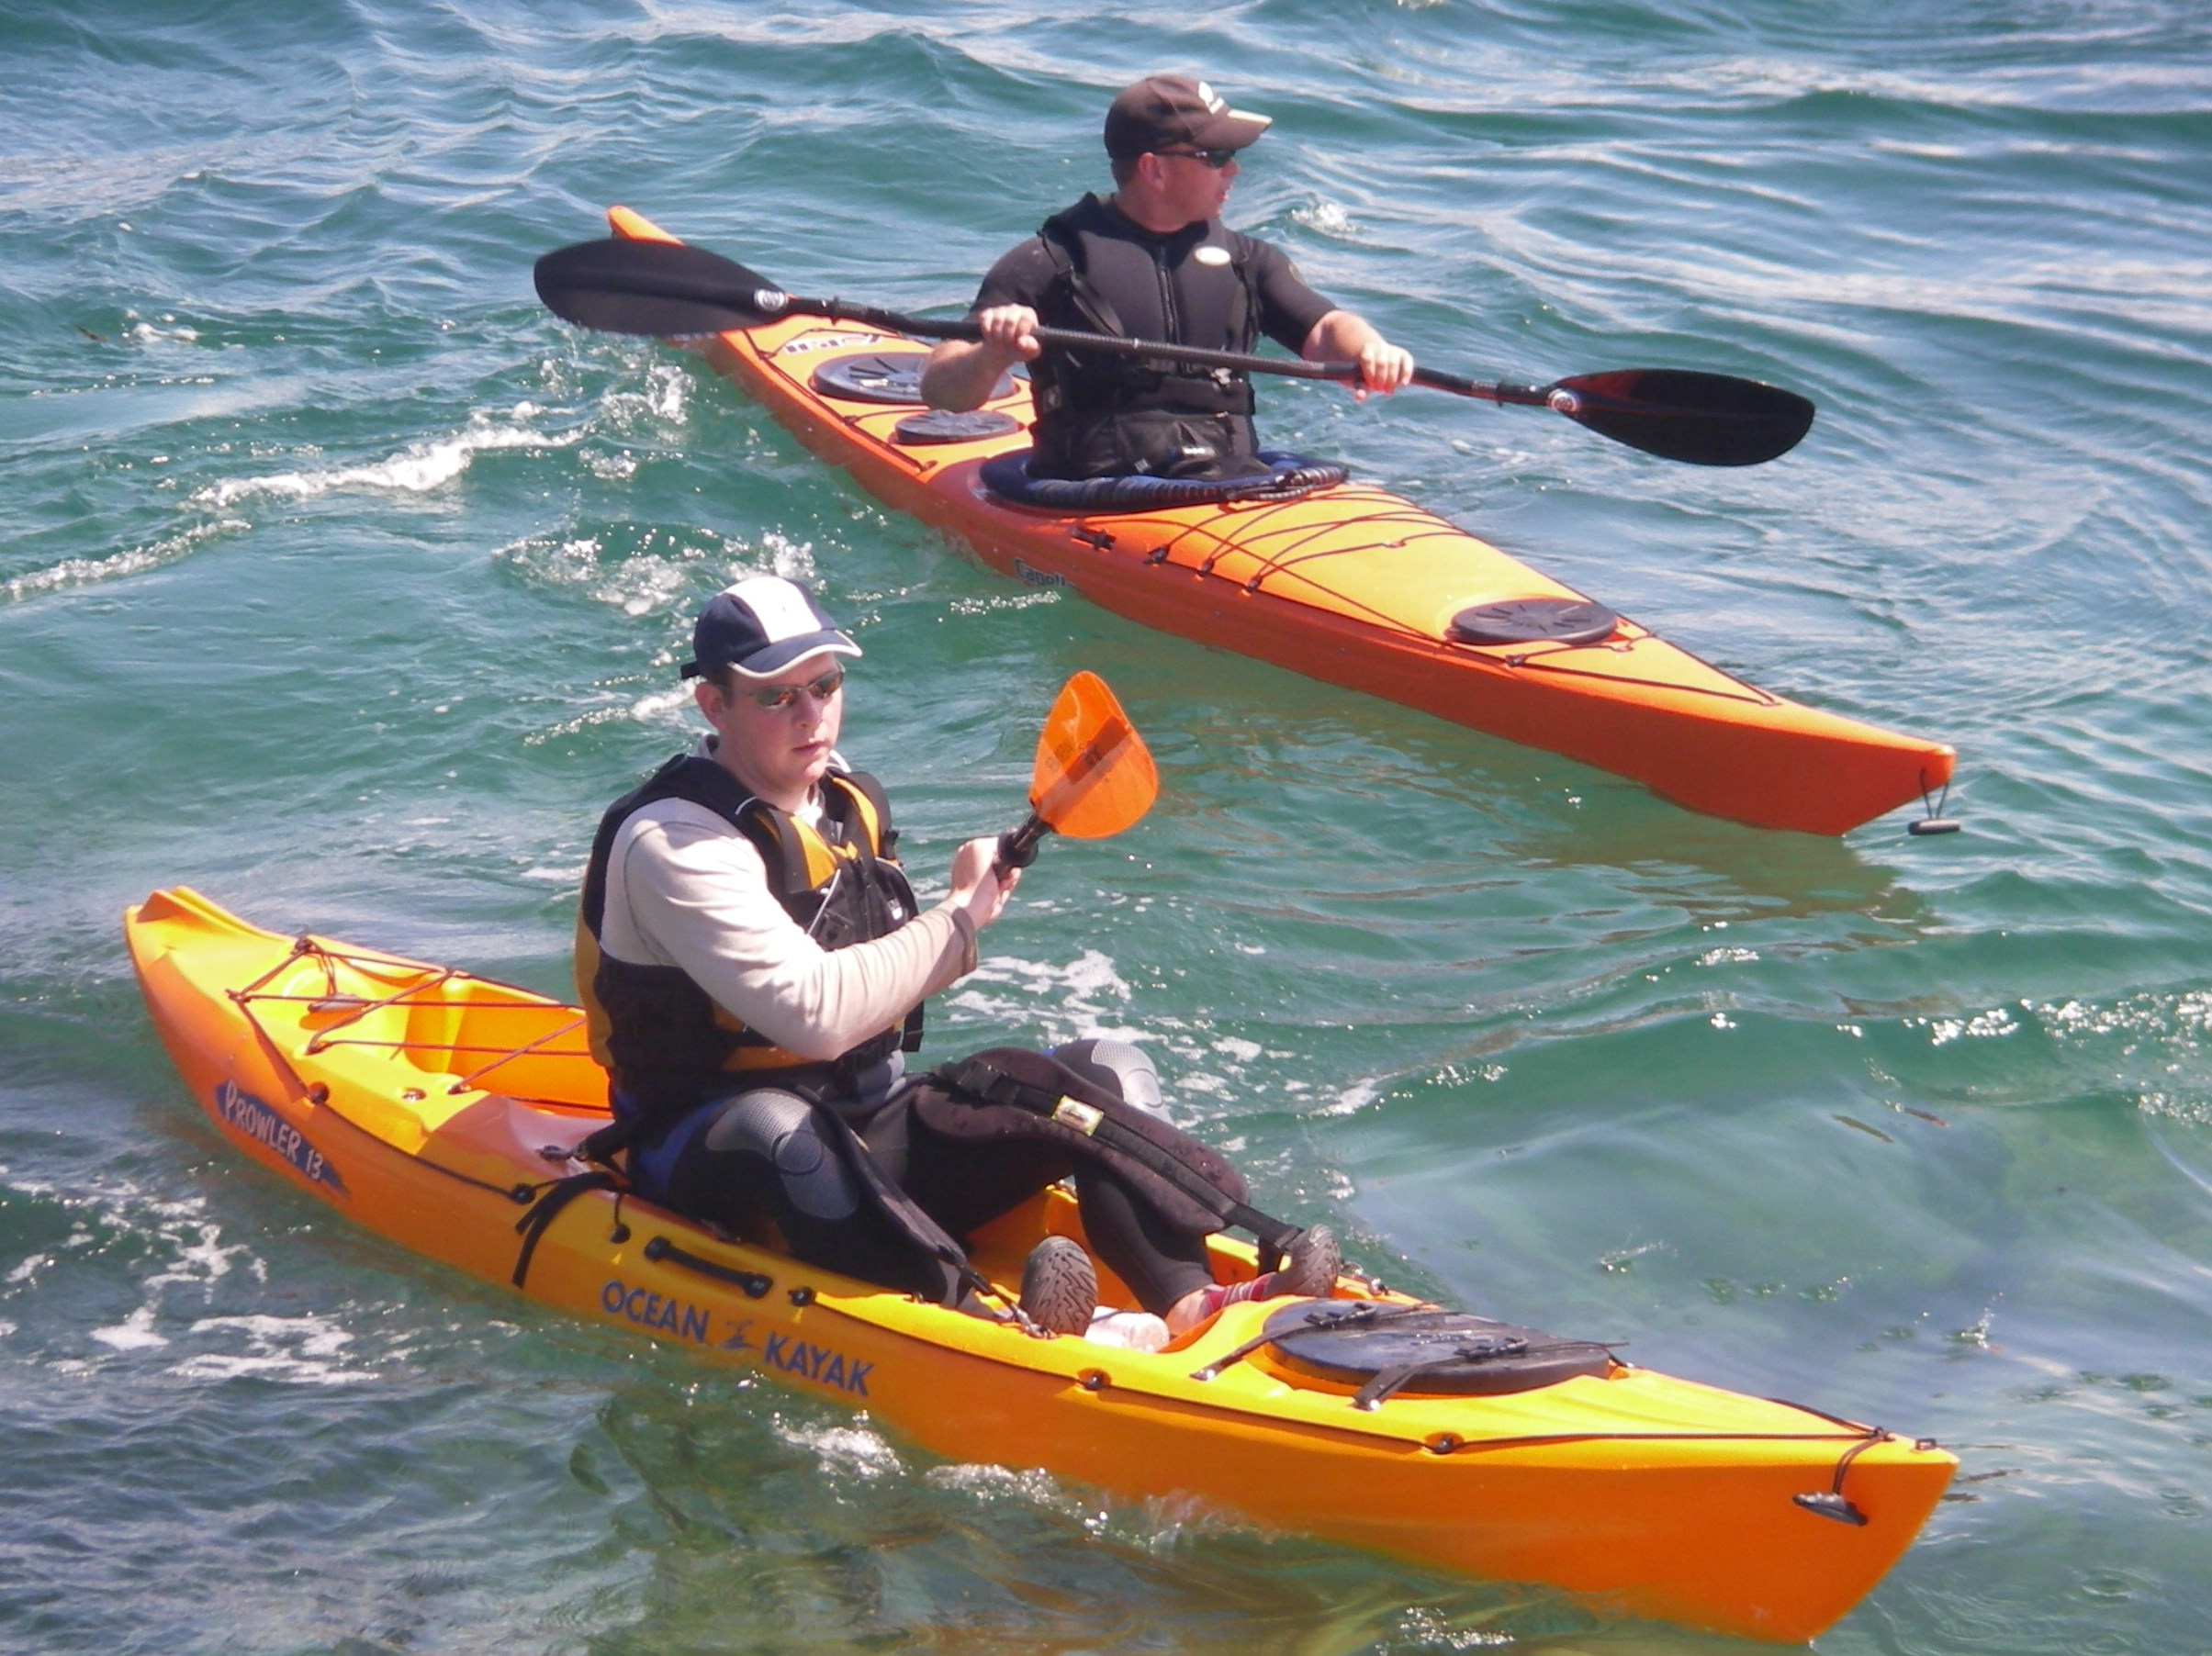 Timotty: Topic Kayak like boat